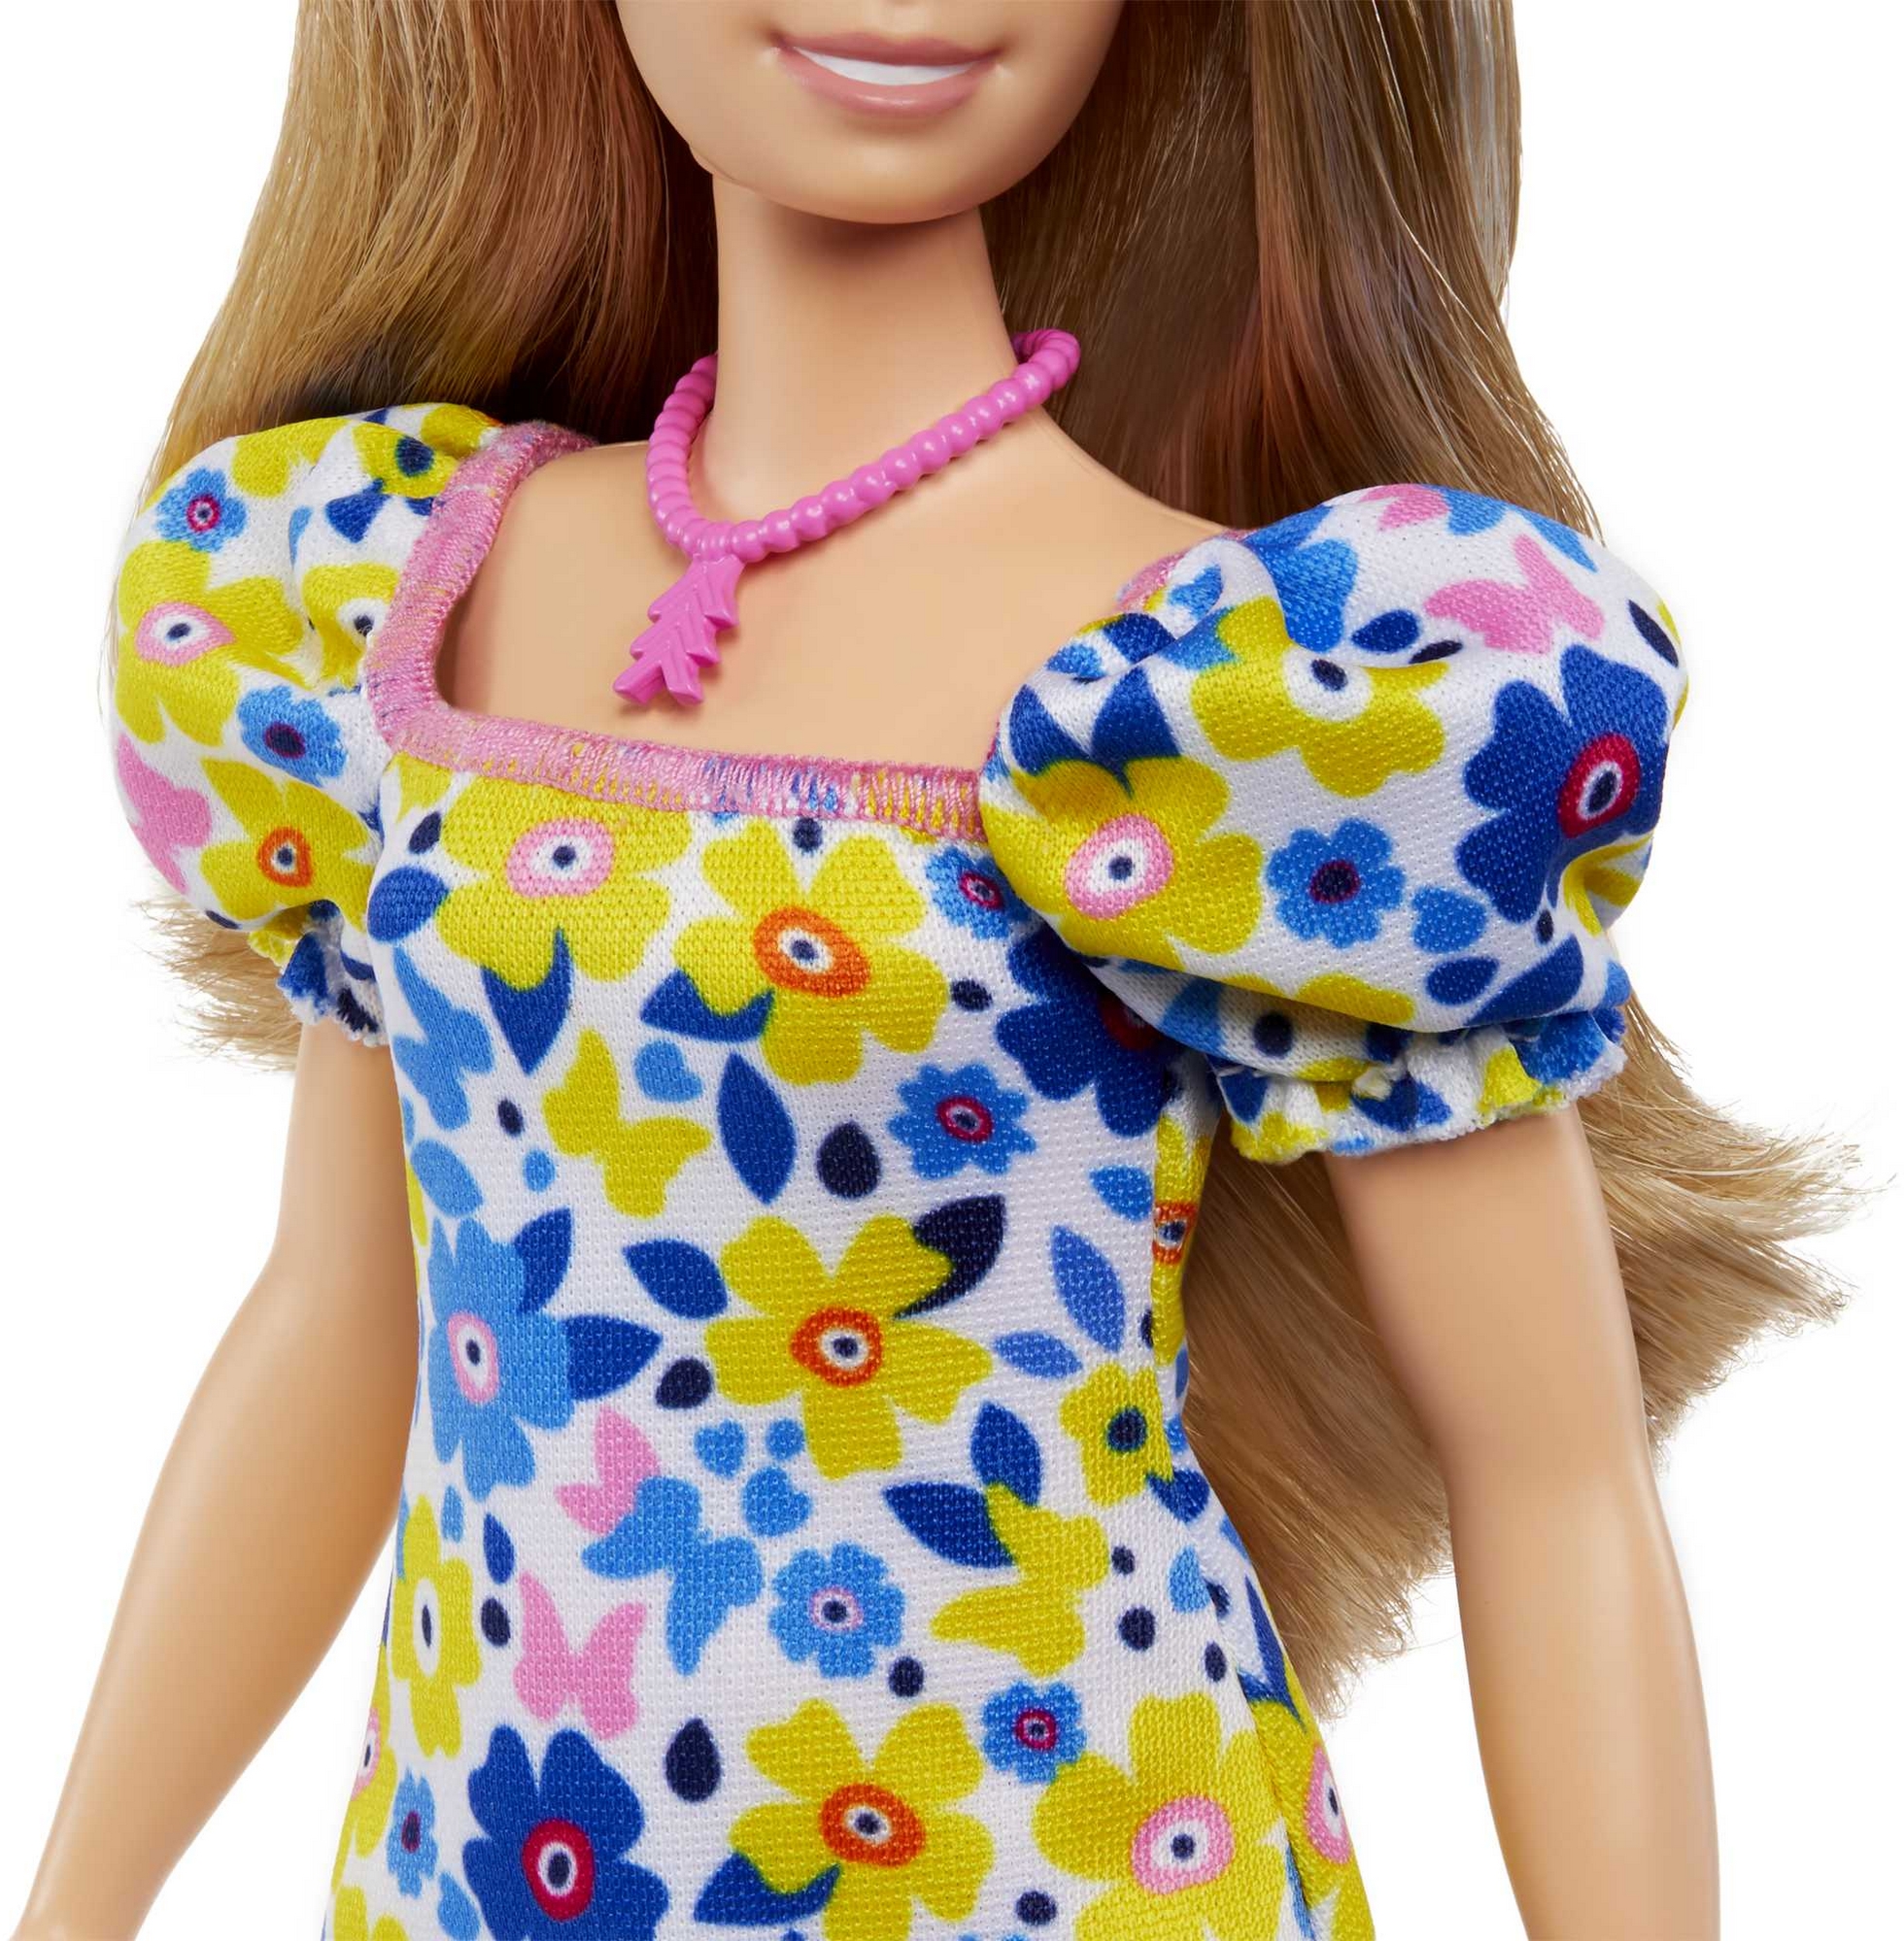 Barbie Fashionistas Dolls Youloveit Com